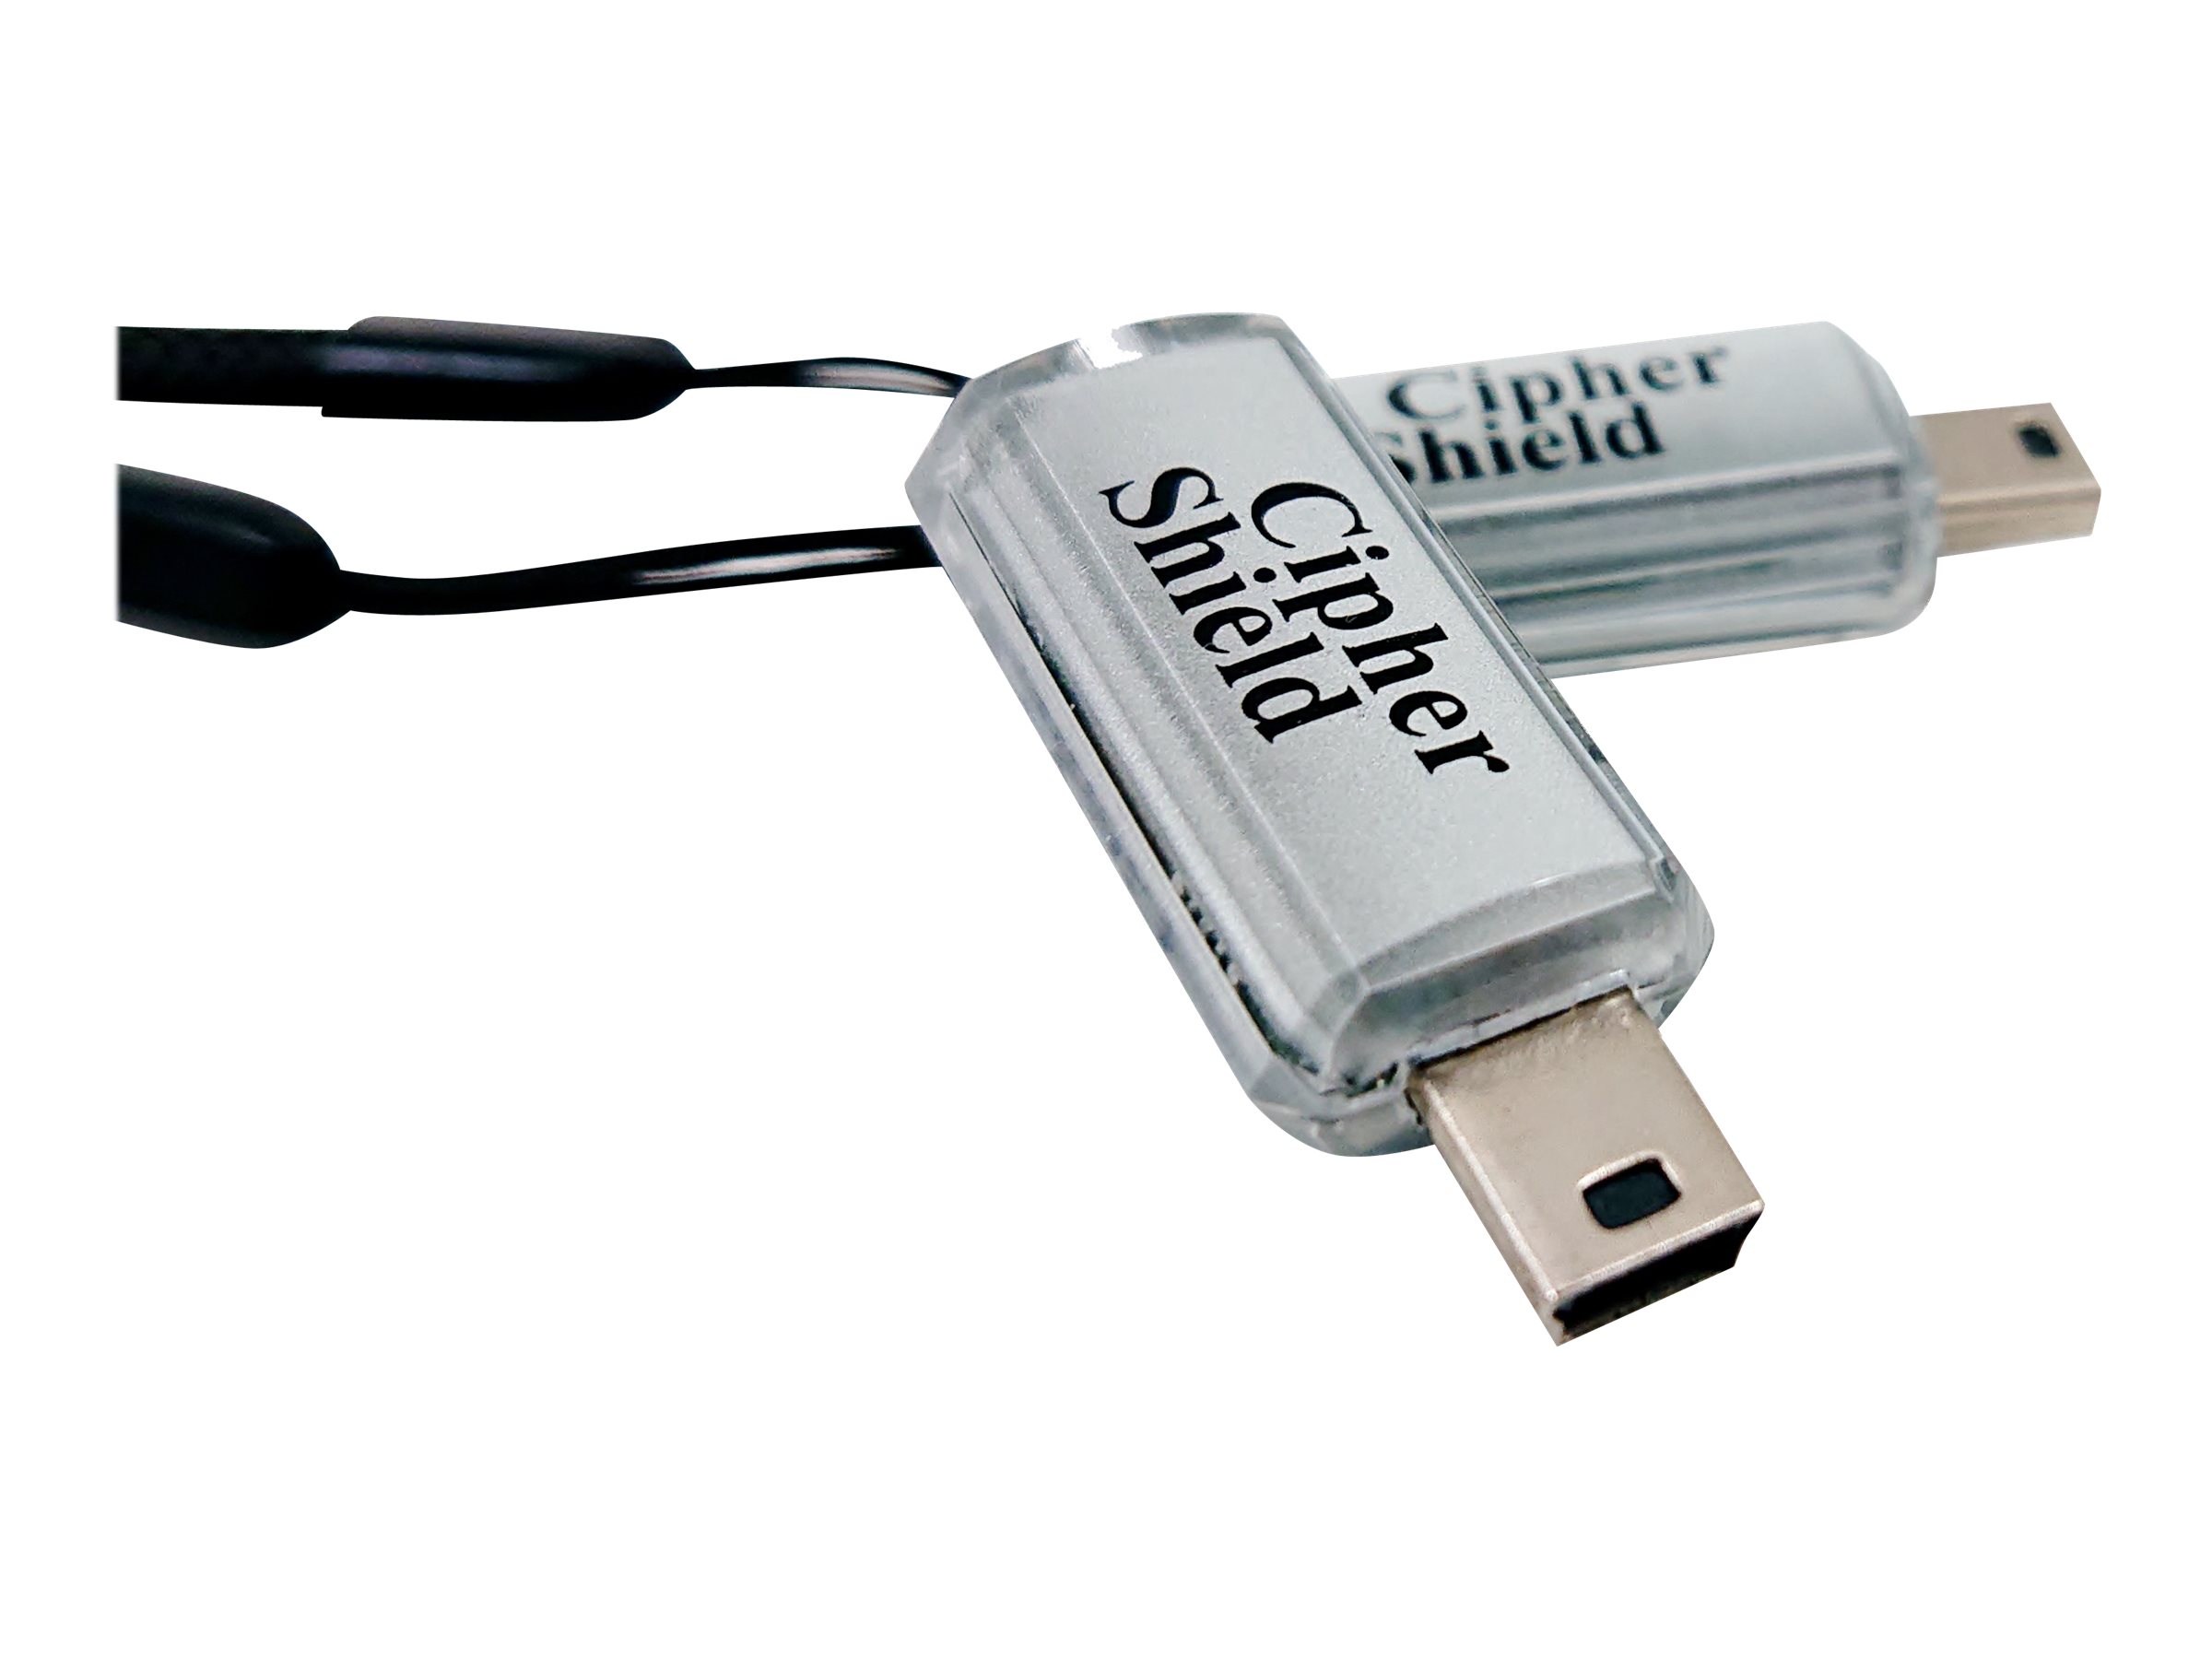 Buslink 4-Bay RAID USB 3.0 eSATA External Desktop Hard Drive (24TB)